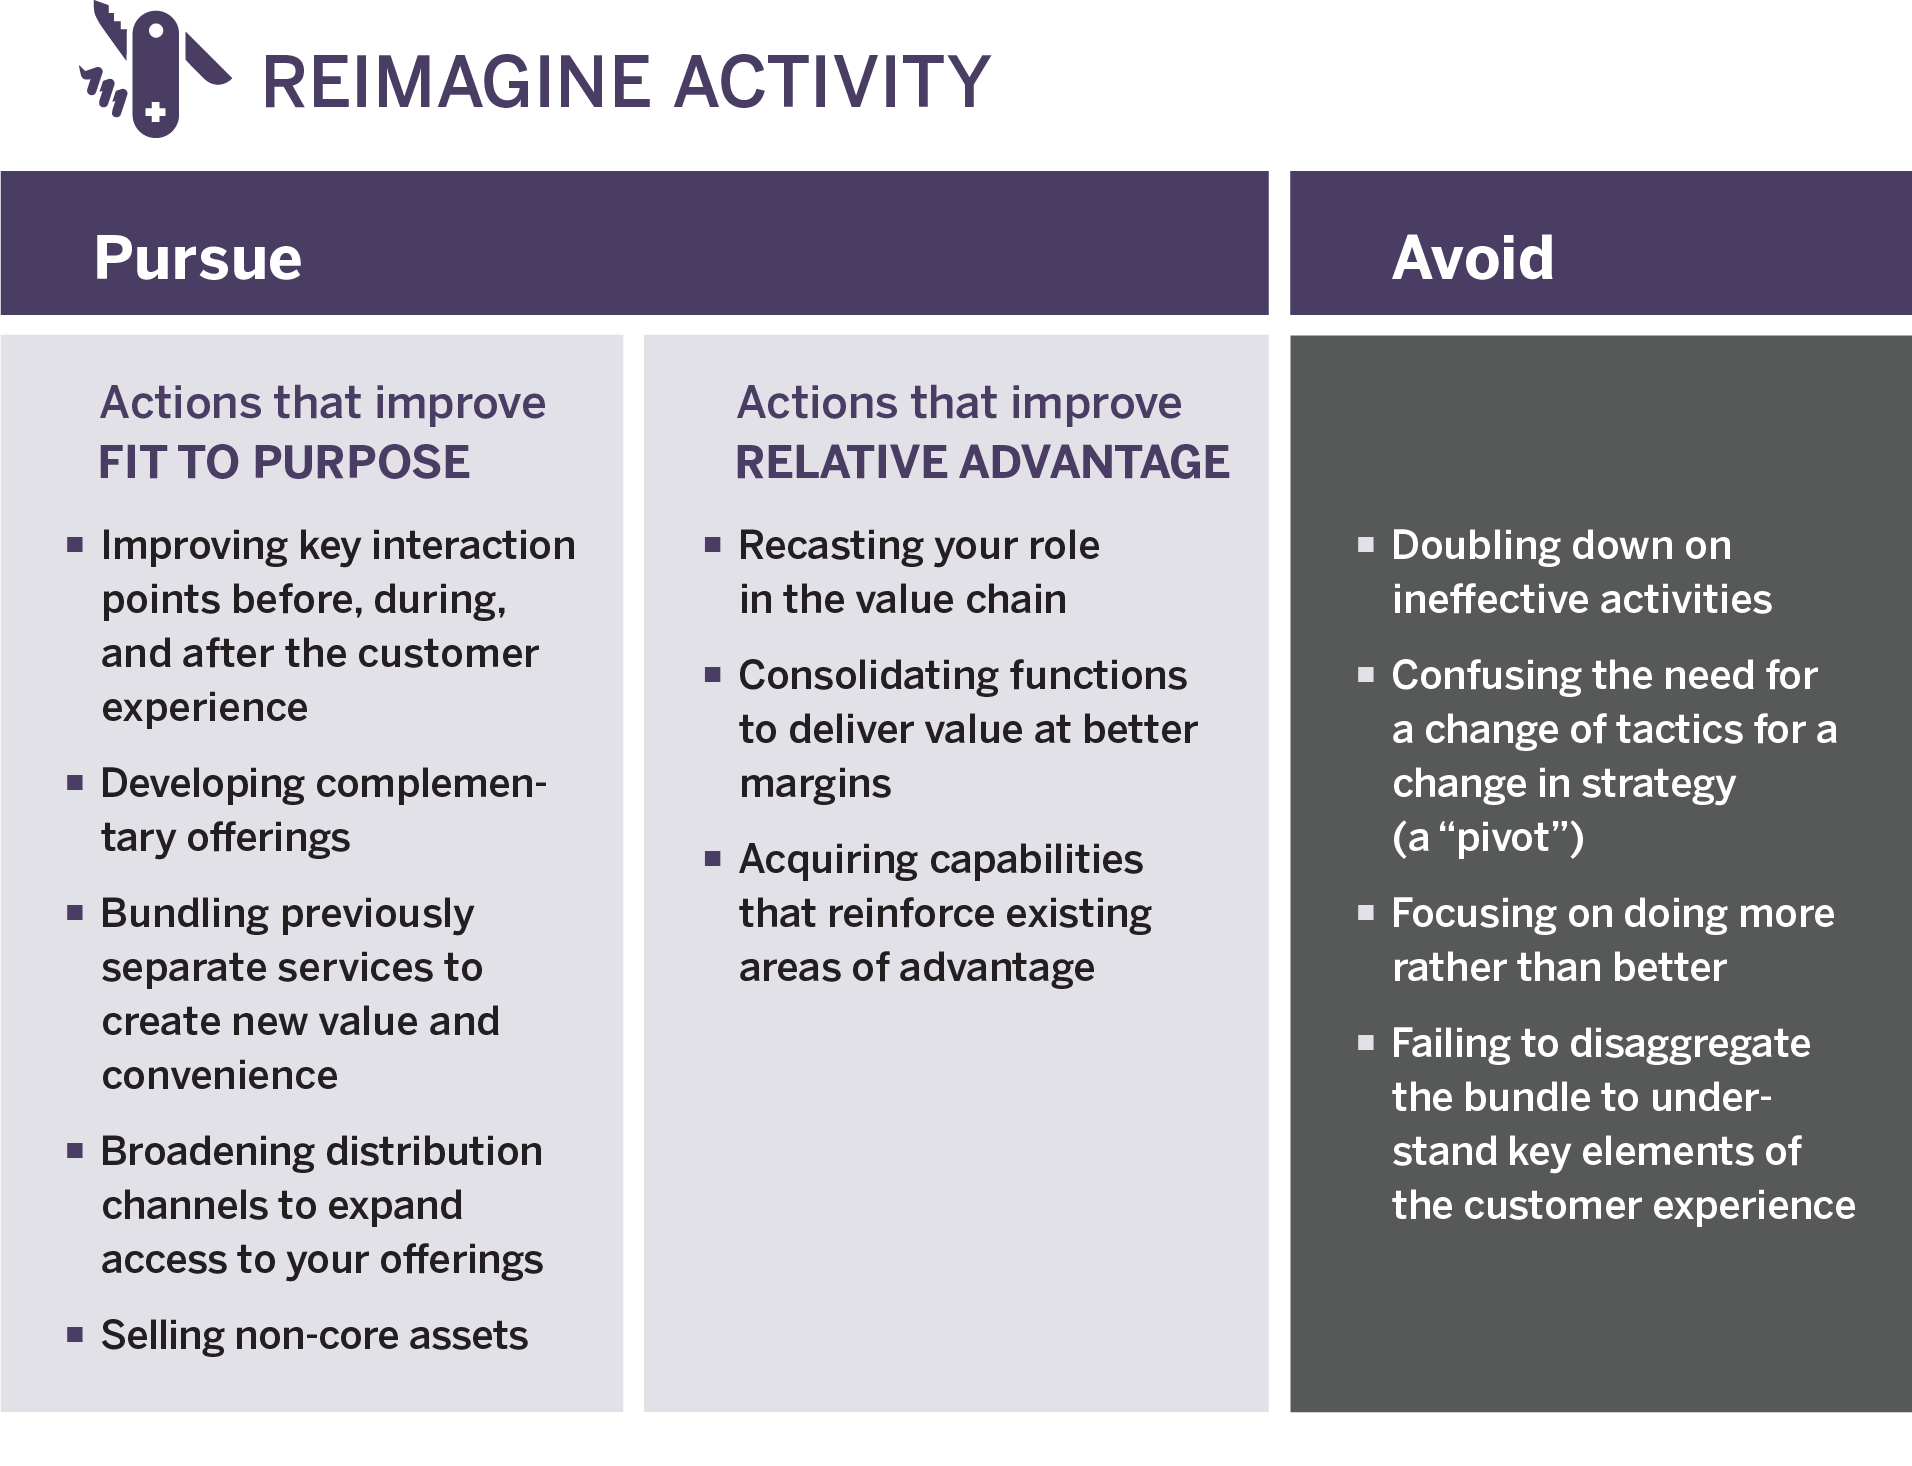 Reimagining Activity Through Innovation